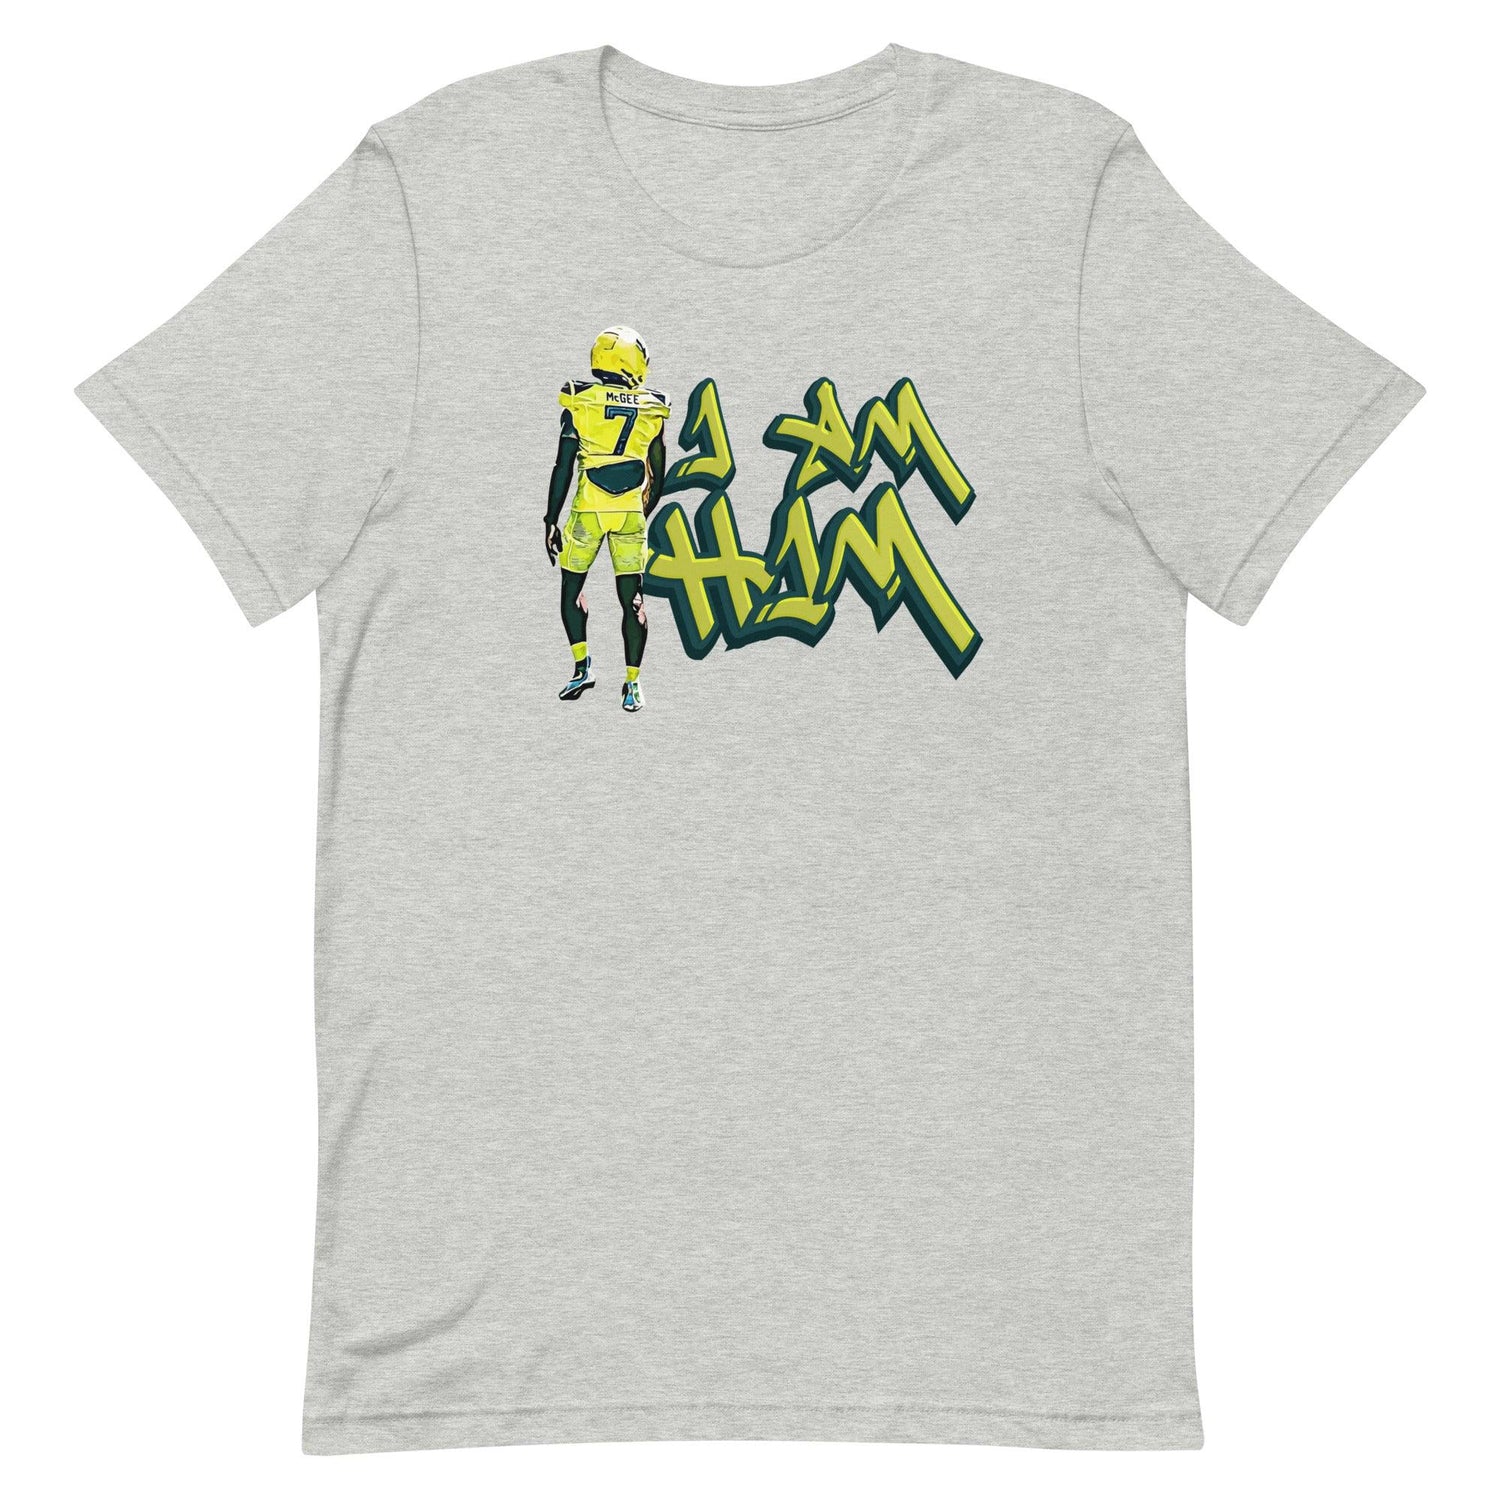 Seven McGee "I AM HIM" t-shirt - Fan Arch